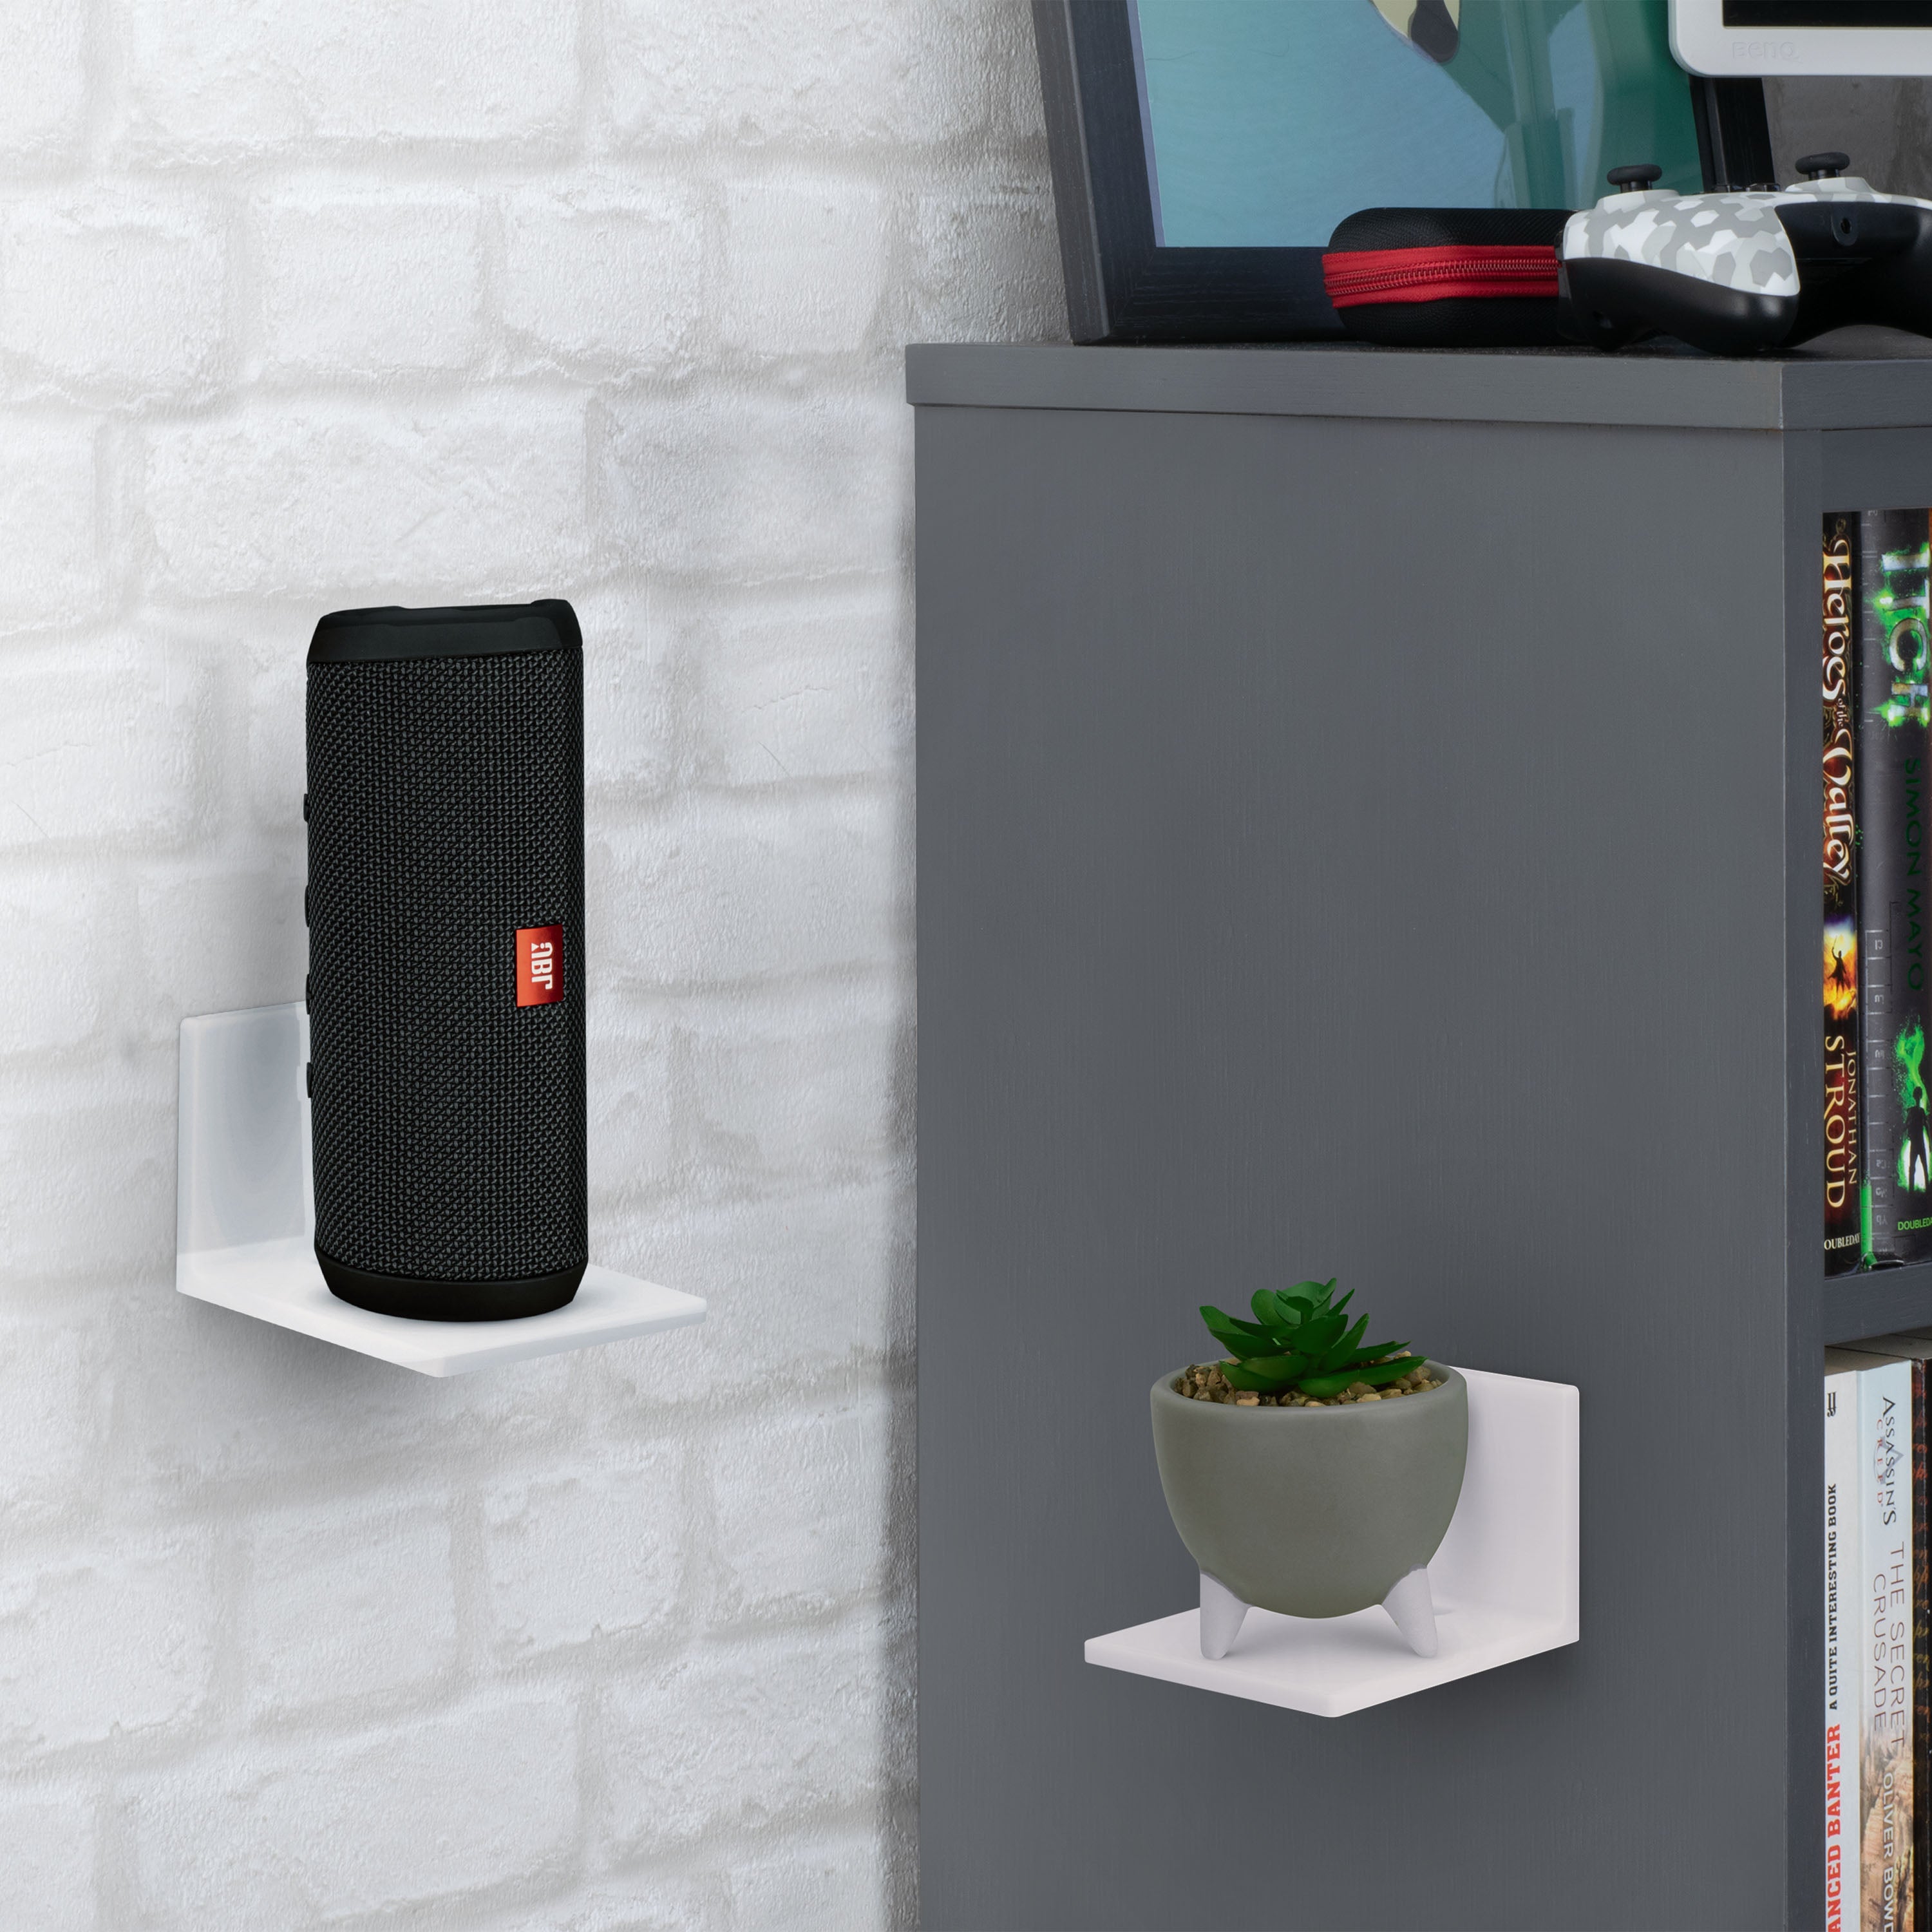 3.5” Small Floating Shelf Speaker & Camera Stand, Self Adhesive, No Sc -  Brainwavz Audio